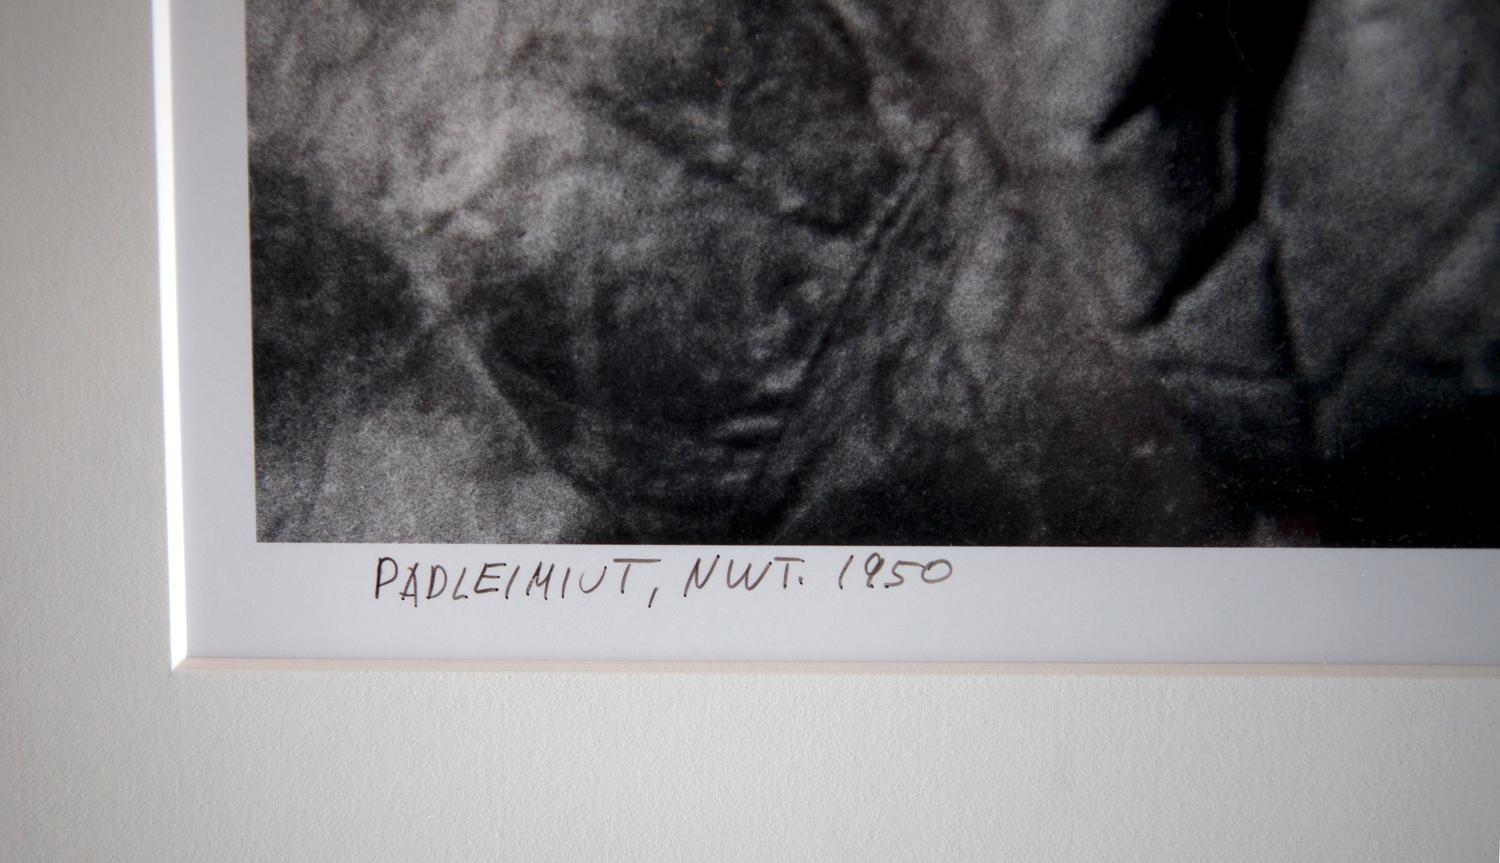 Padleimuit, NWT, 1950 - Gray Black and White Photograph by Richard Harrington